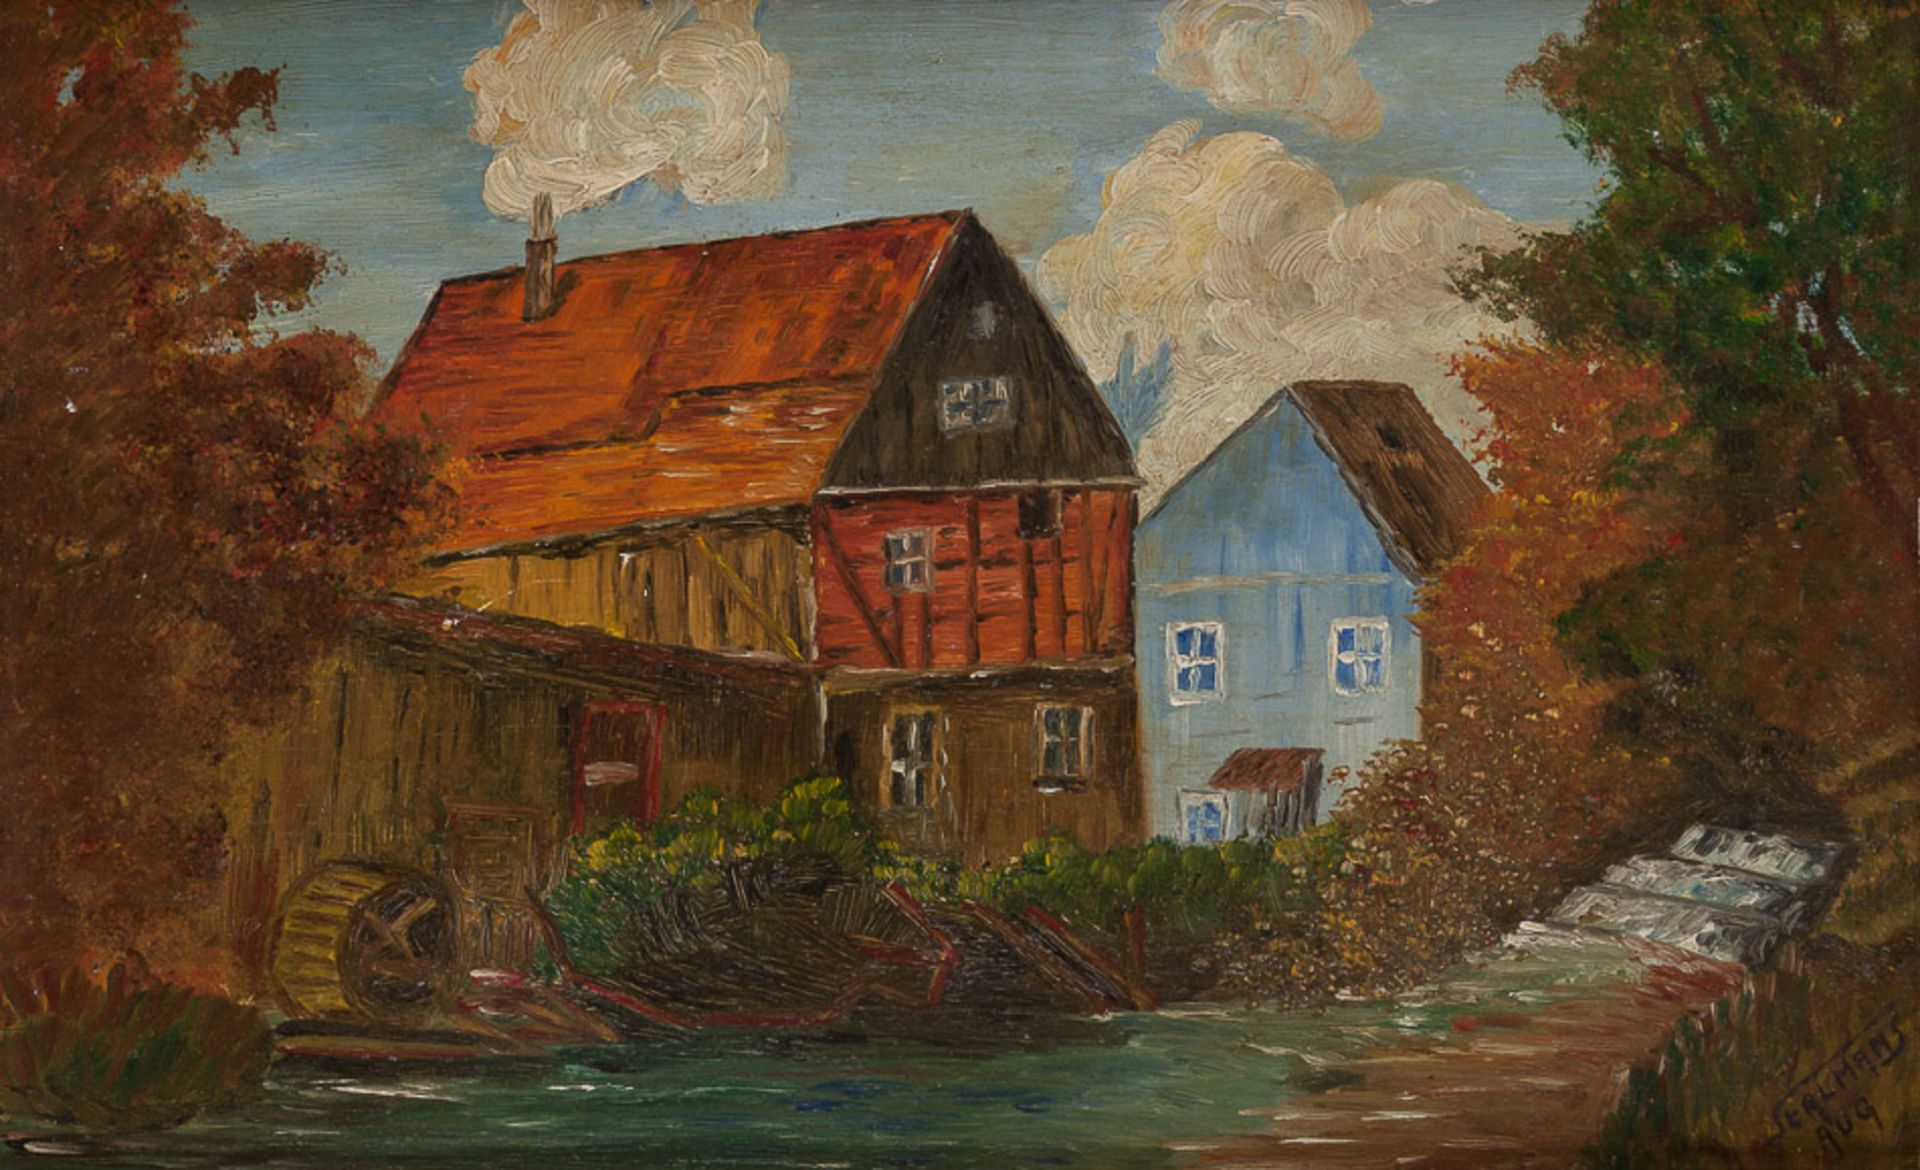 Sealmans 19./20. Jhd."Dorfidylle"
Gemälde Öl/Holz, 34 cm x 54,5 cm, gerahmt,
rechts unten signiert